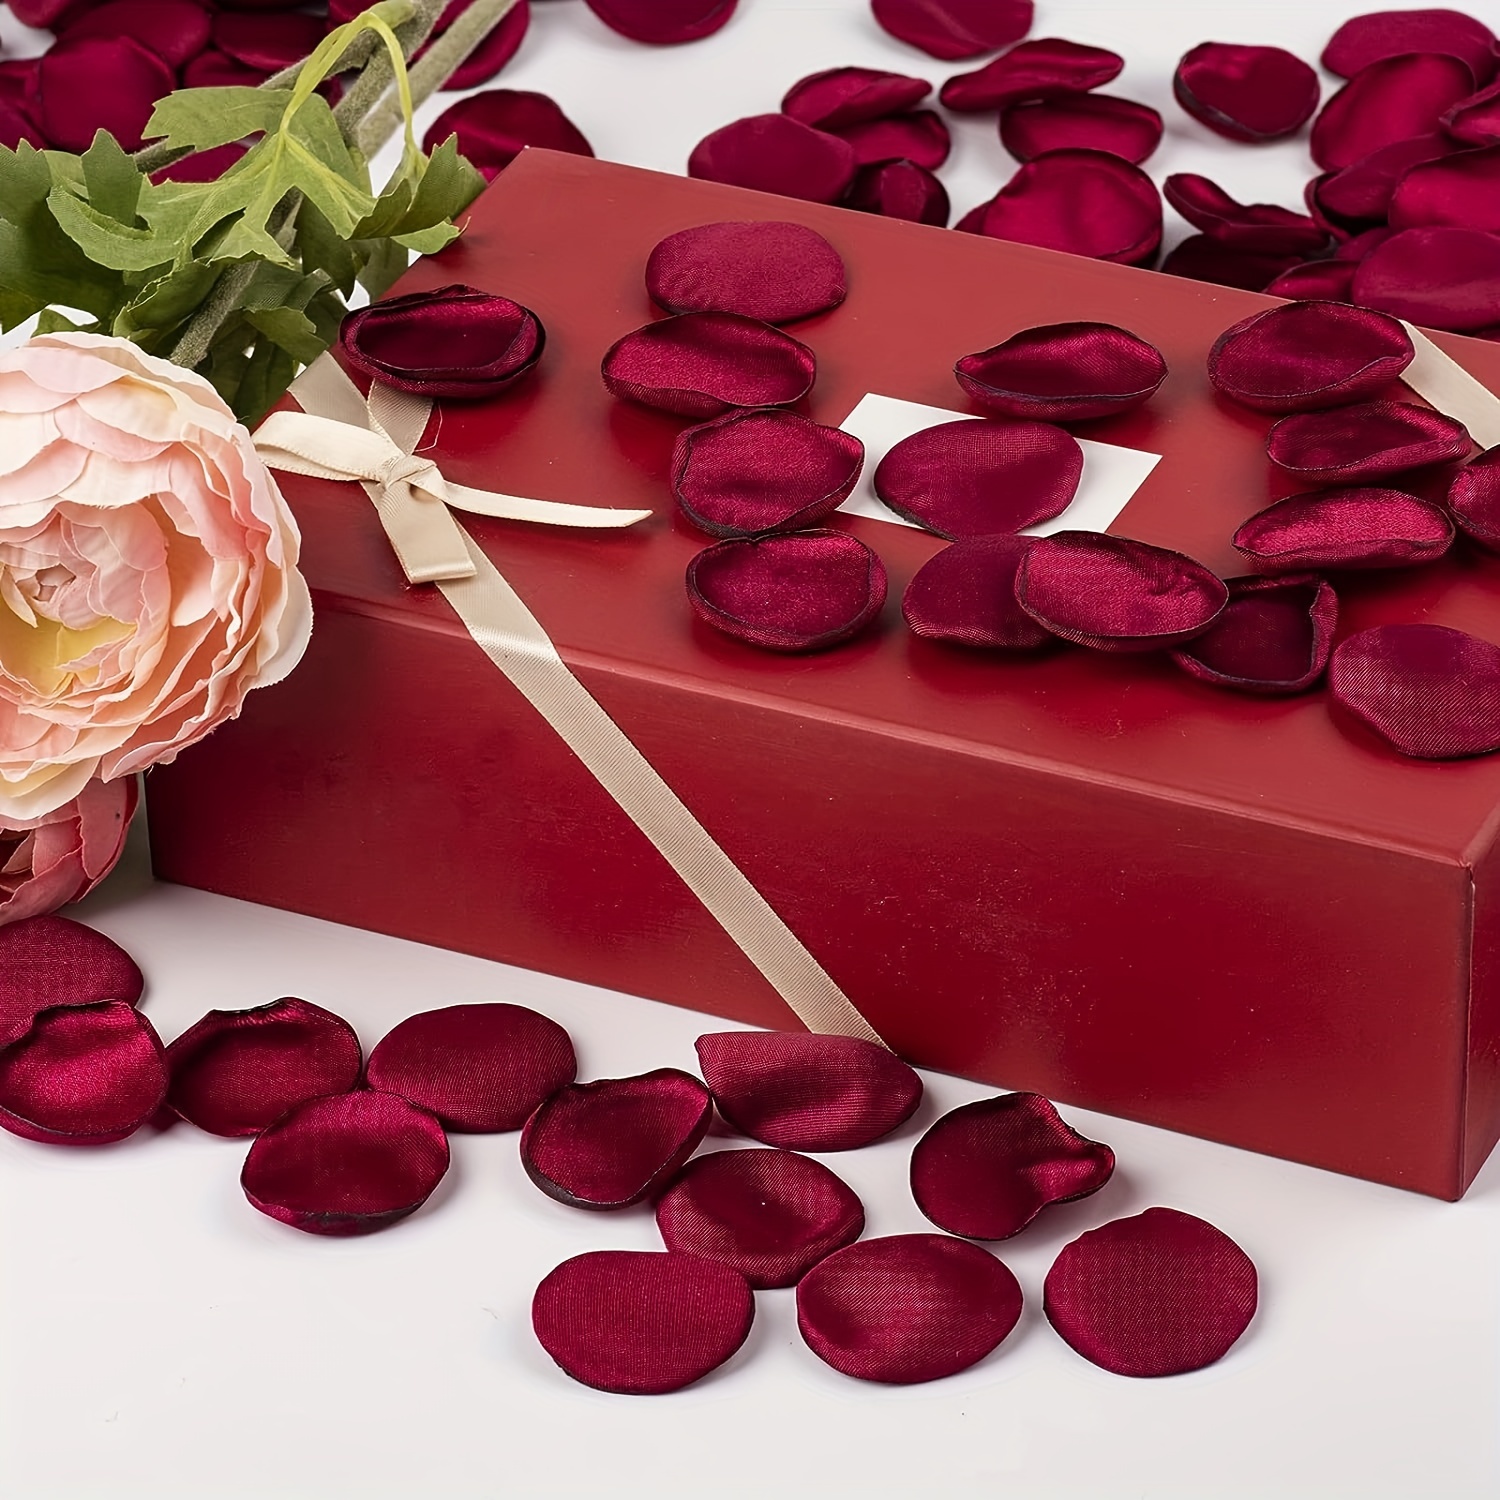 500-10000pcs Wholesale Artificial Silk Red Rose Petals Decorations for  Wedding Party Wedding Rose Petals 6Z